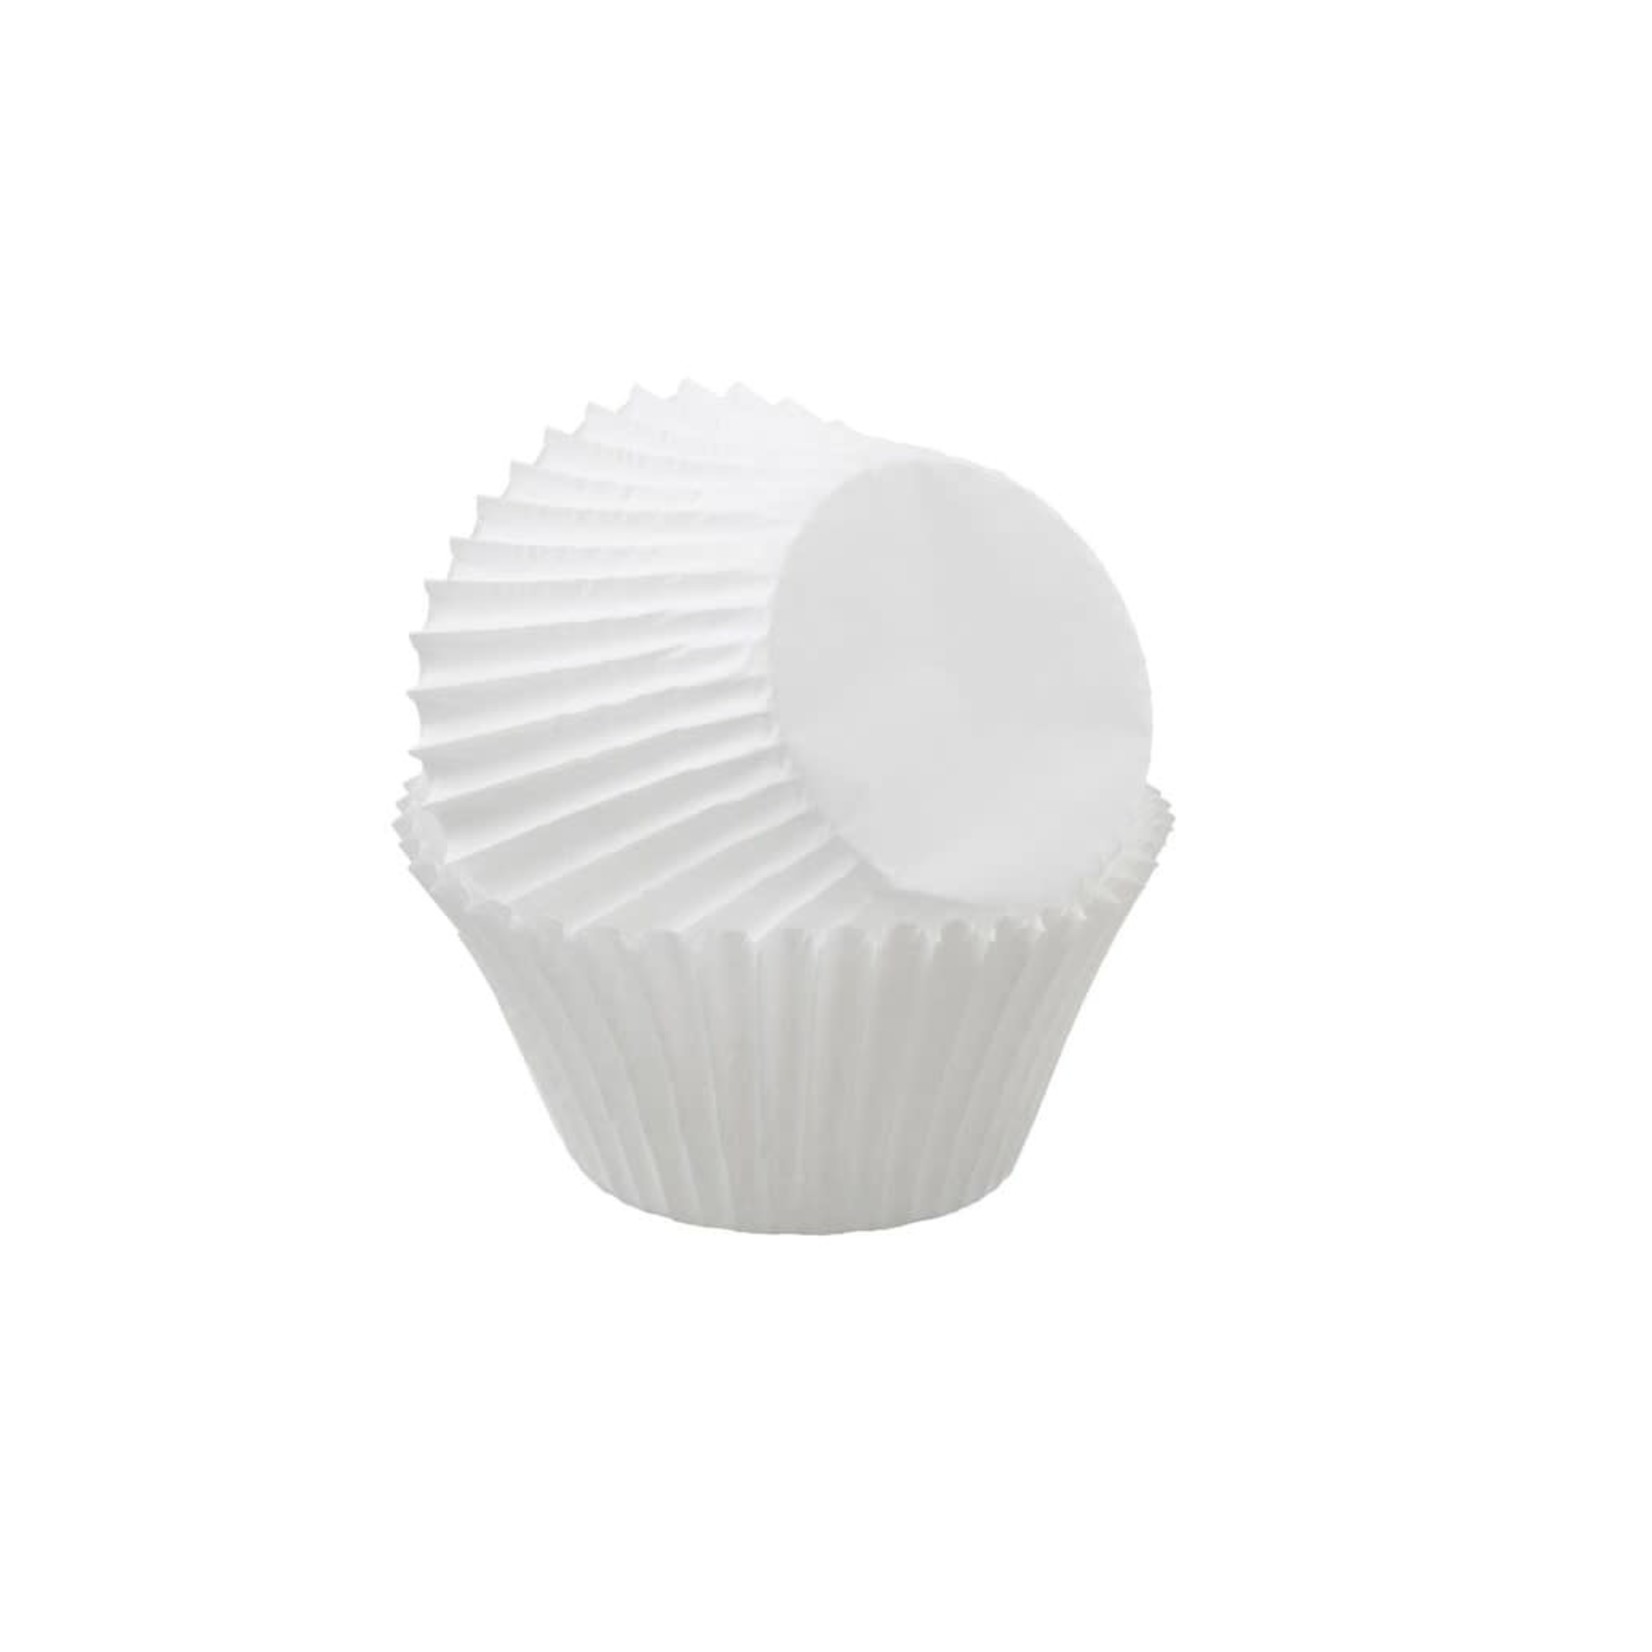 Wilton Bright White Paper Jumbo Cupcake Liners, 50-Count 